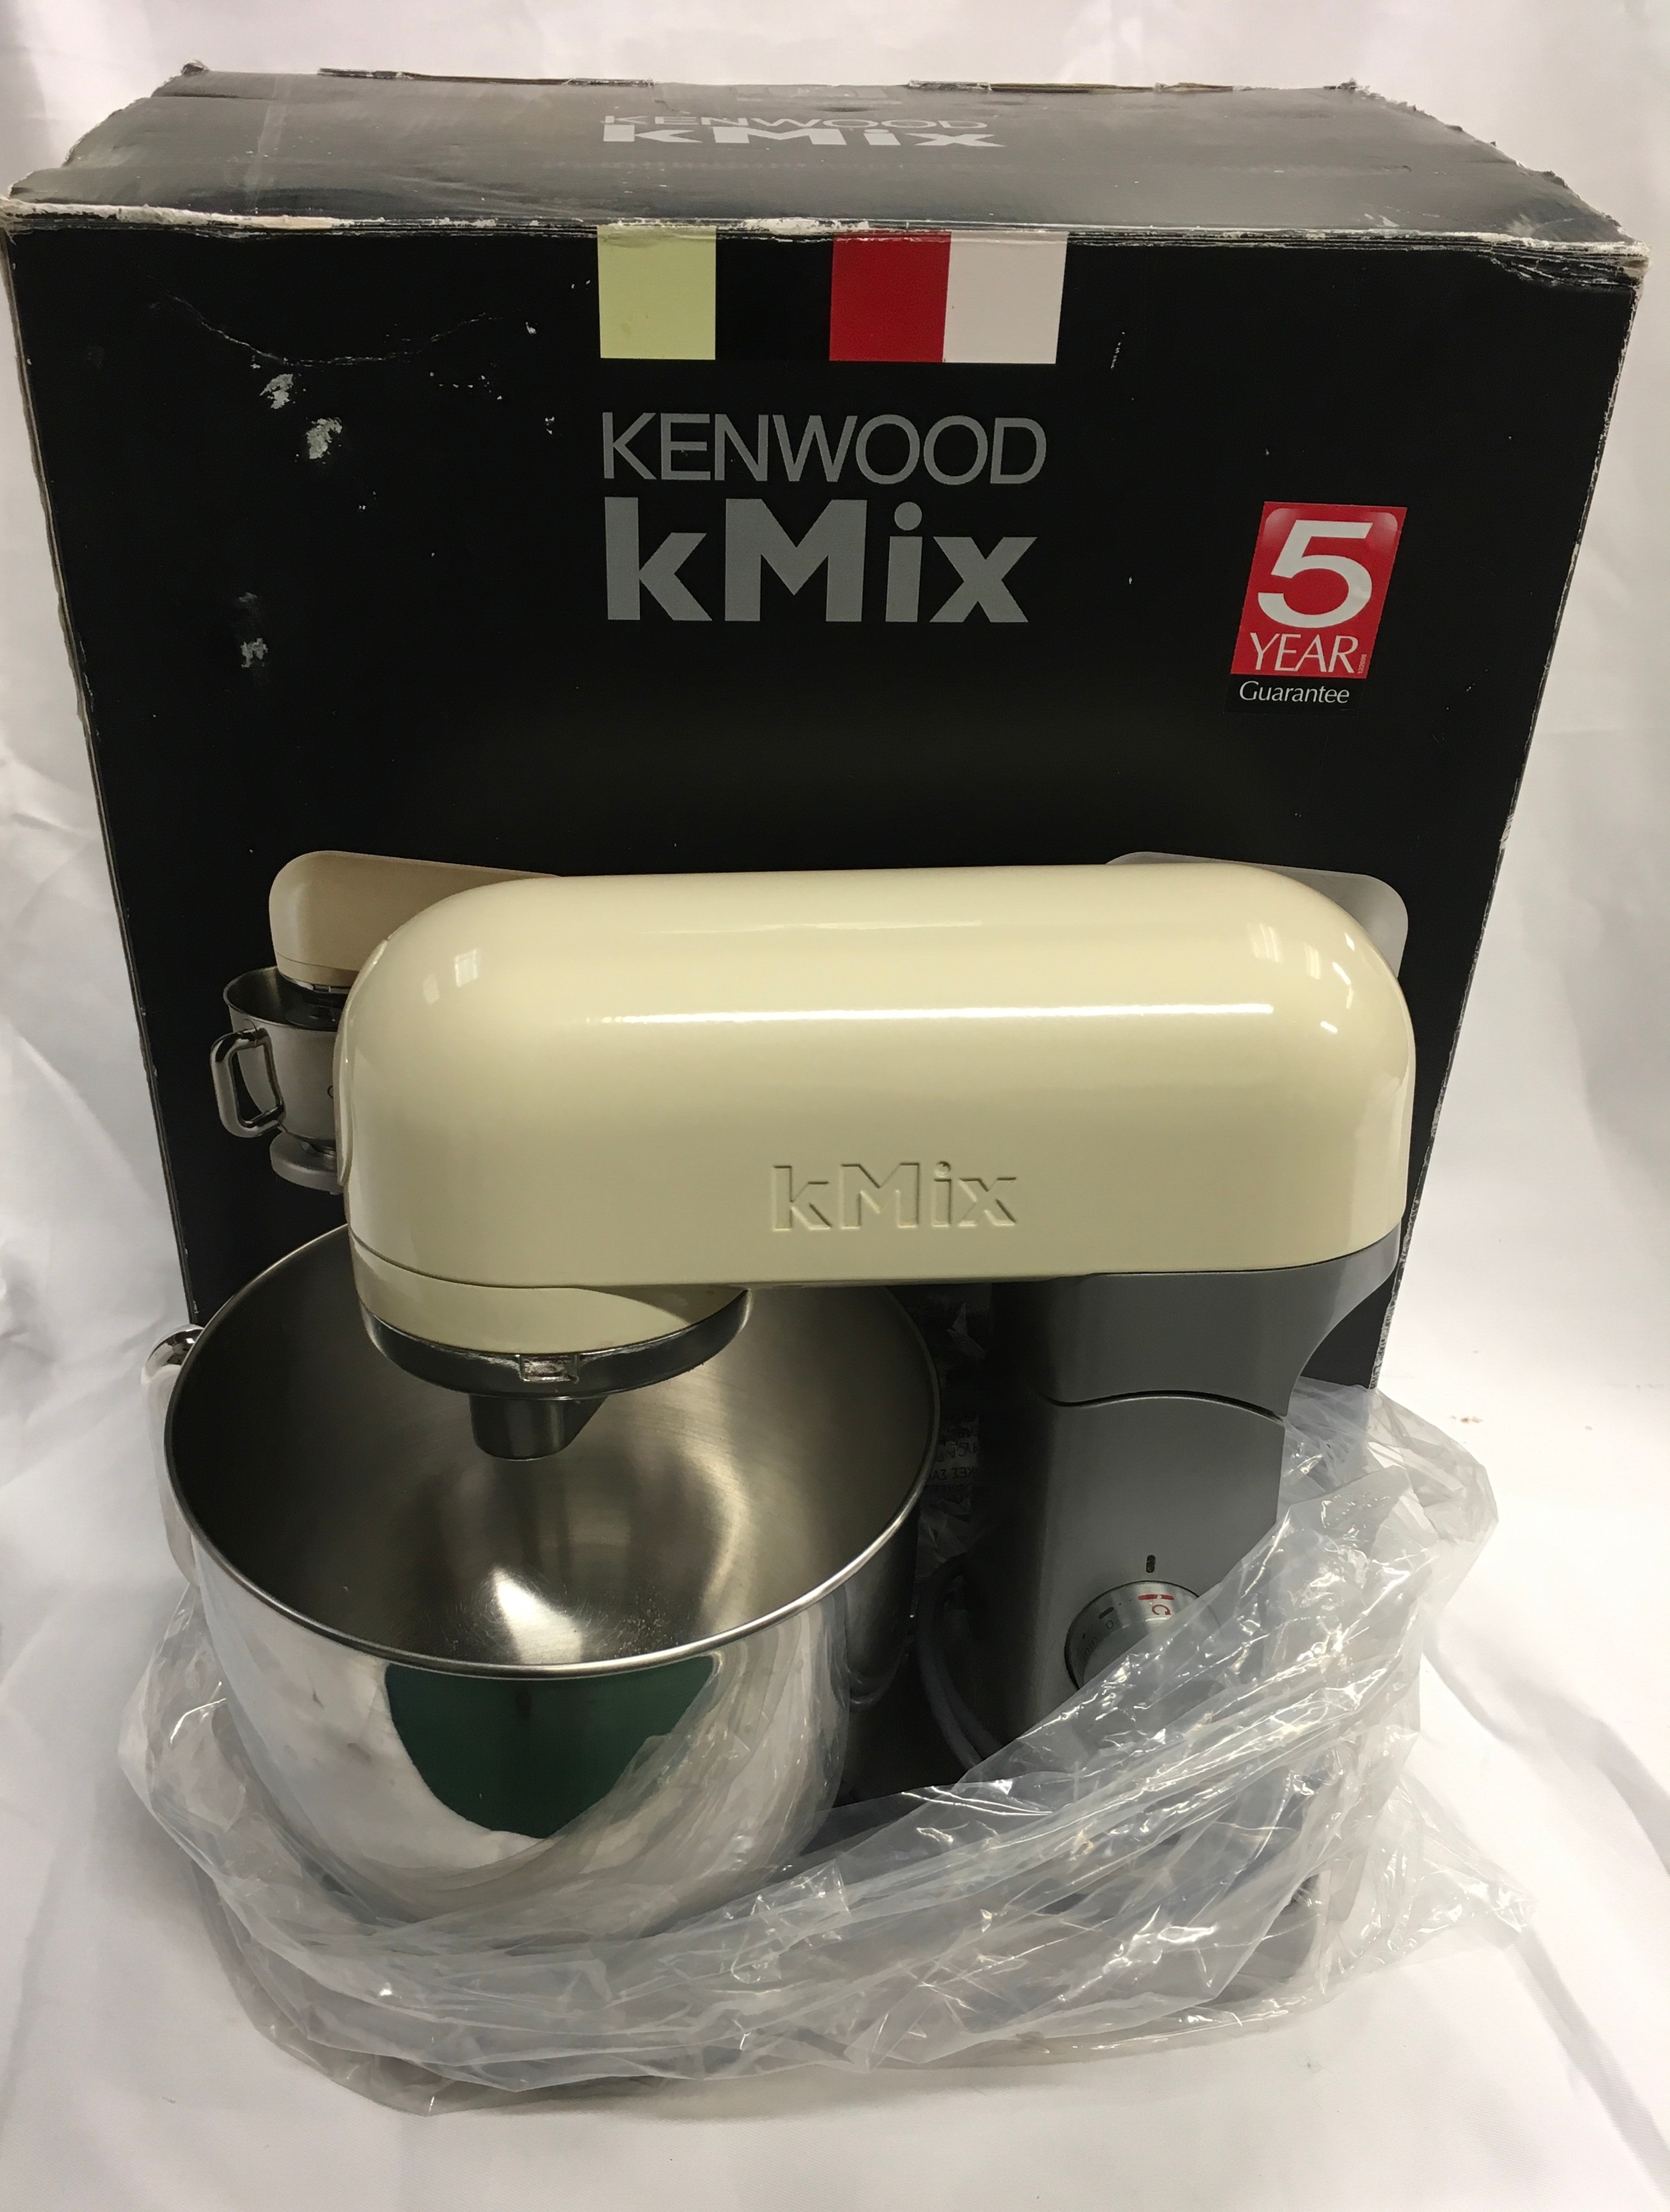 Kenwood kMix in box.